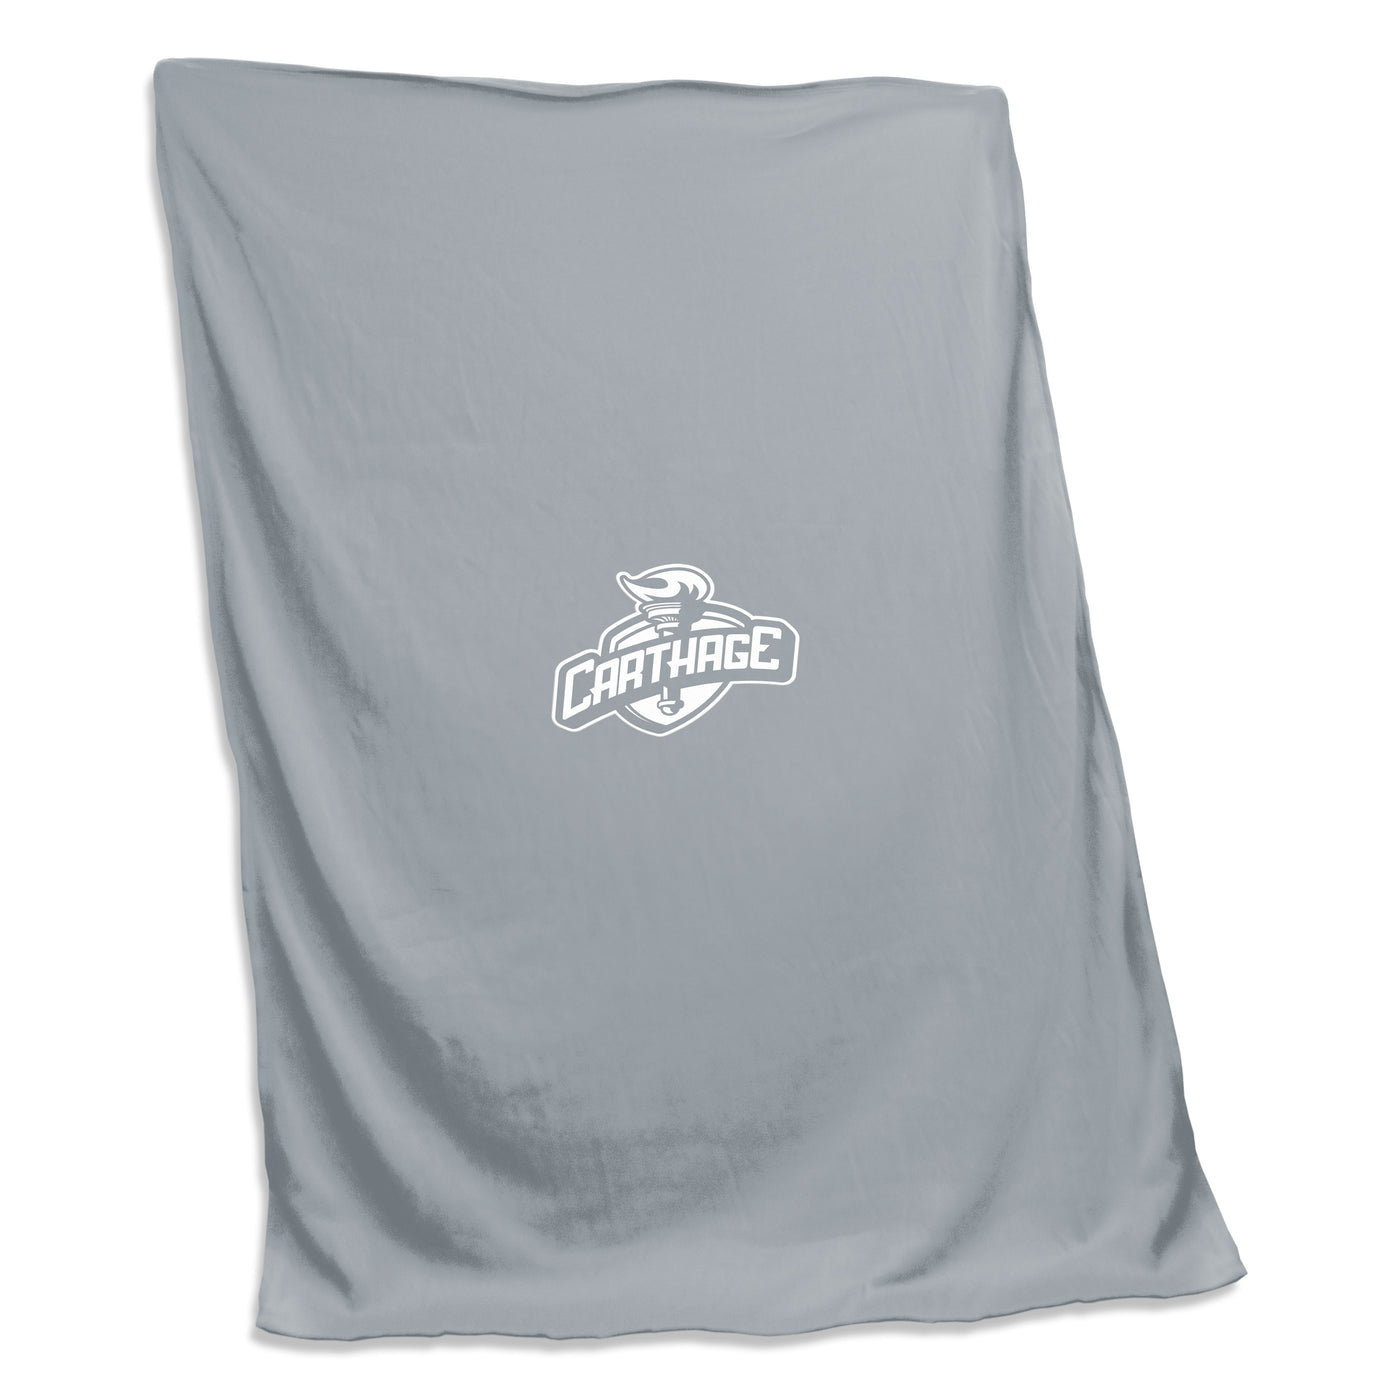 Carthage College Gray Sweatshirt Blanket (Screened)